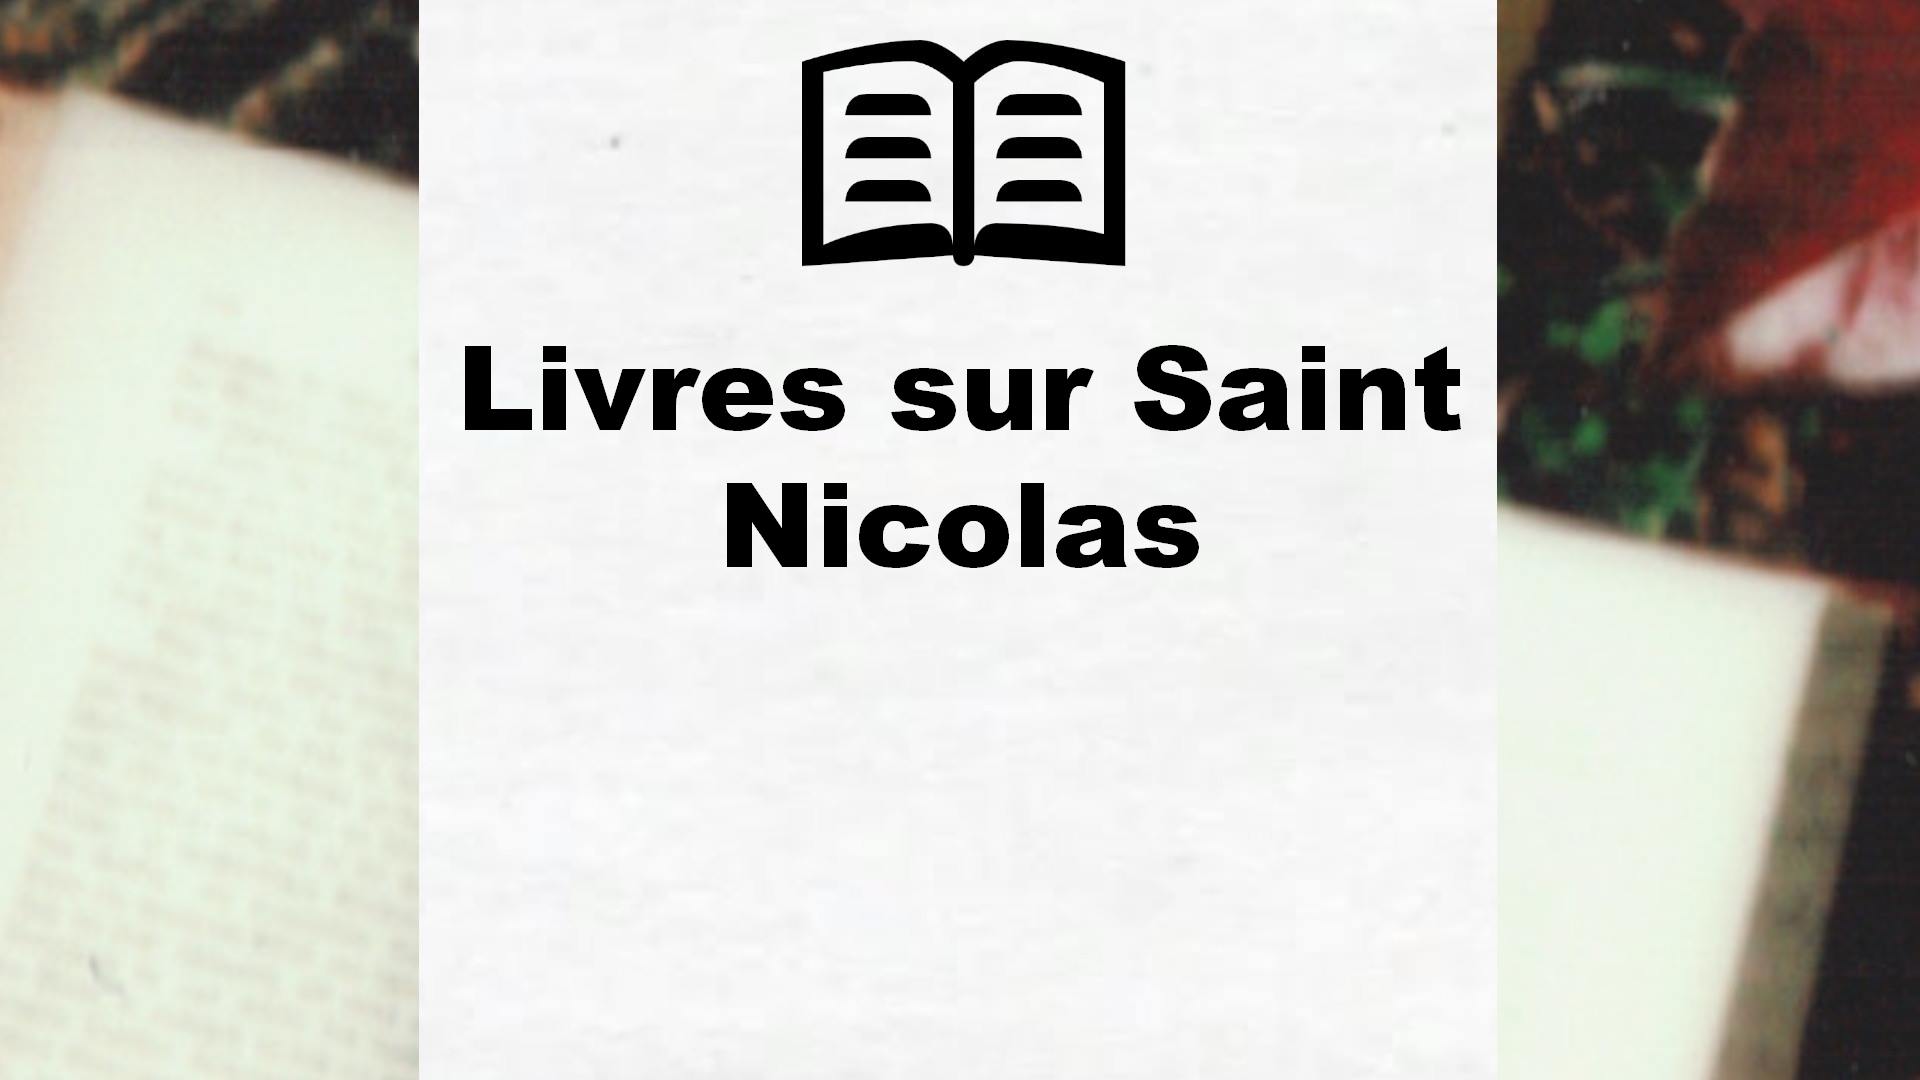 Livres sur Saint Nicolas